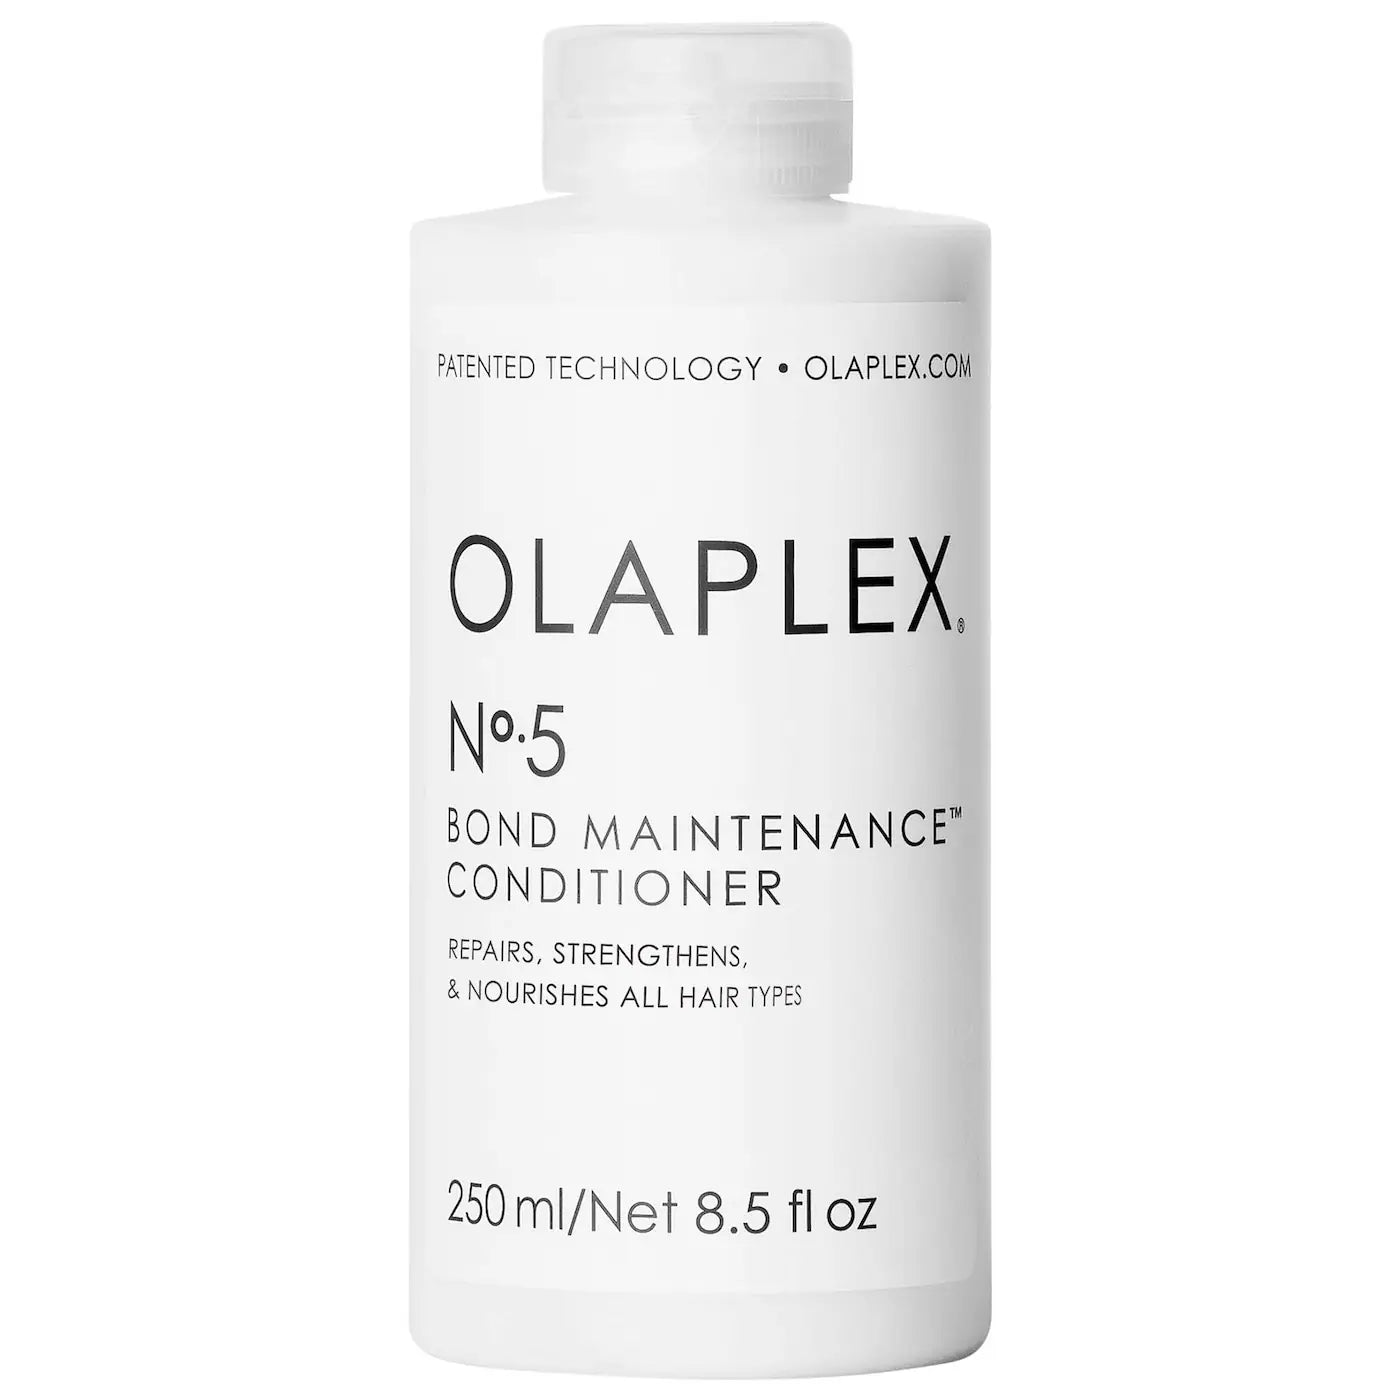 Olaplex No. 5 Bond Maintenance™ Conditioner